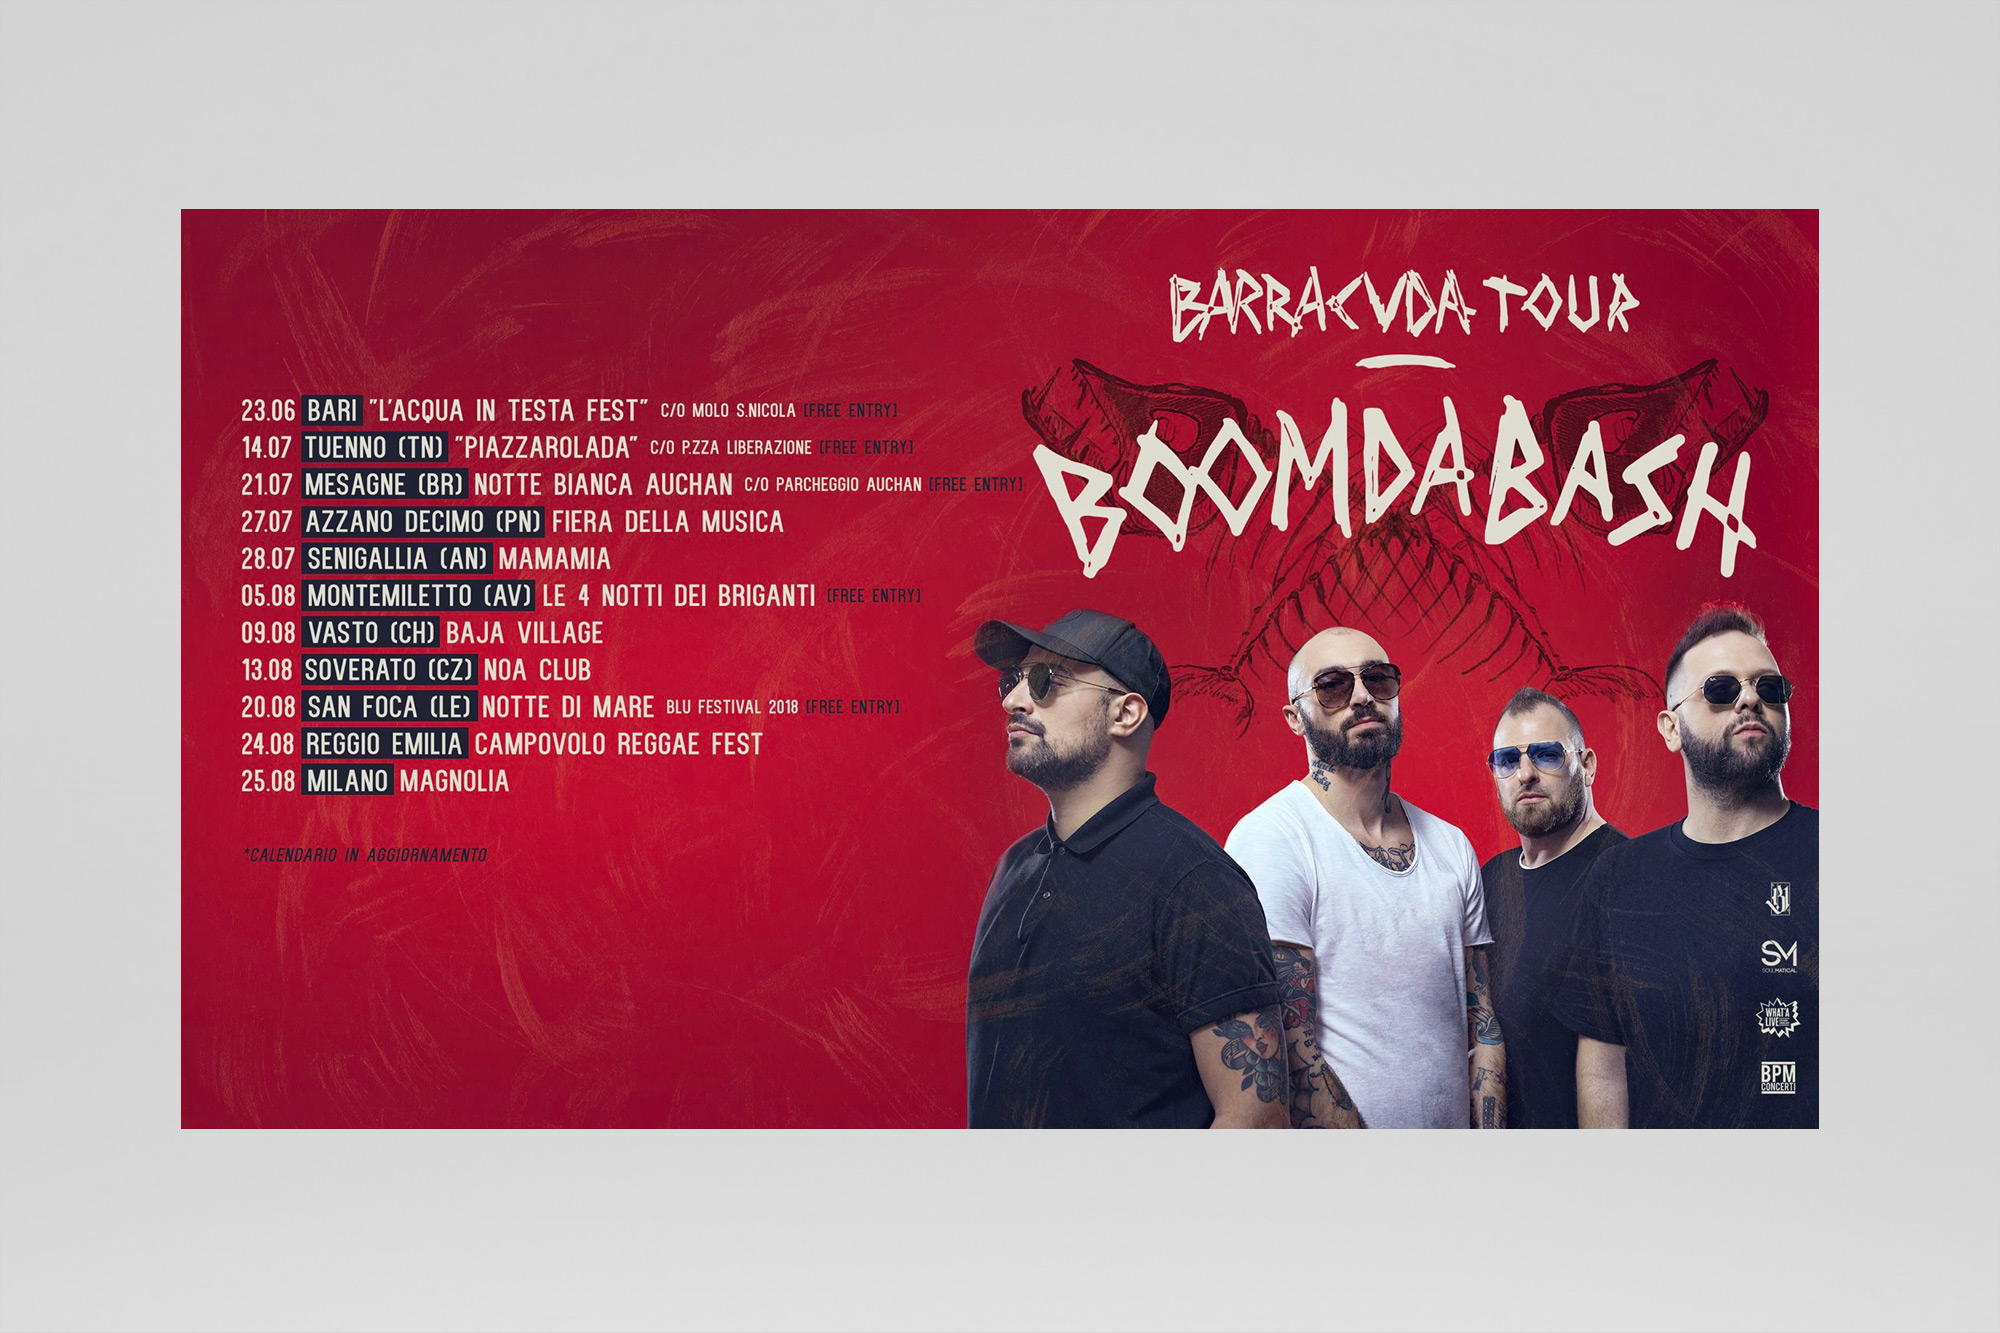 Boomdabash “Barracuda” – CD Pack, Tour Poster - img 11